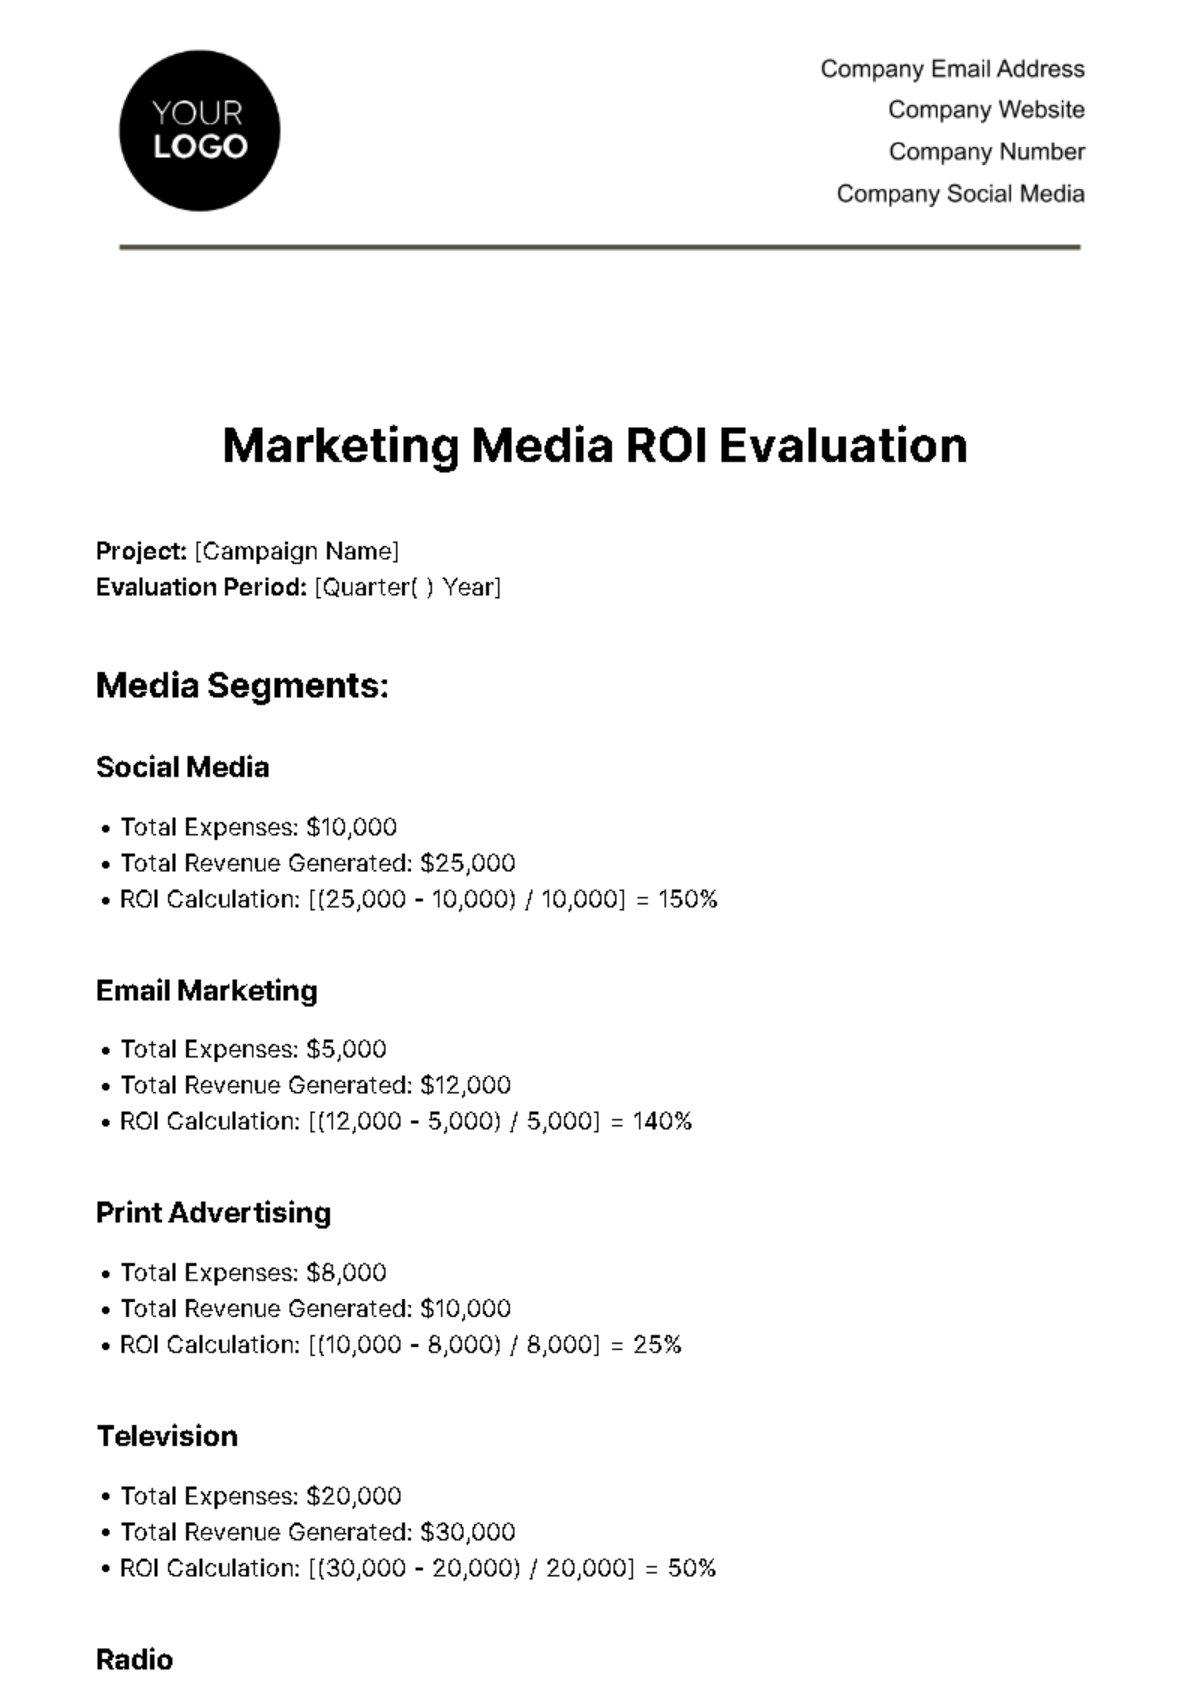 Marketing Media ROI Evaluation Template